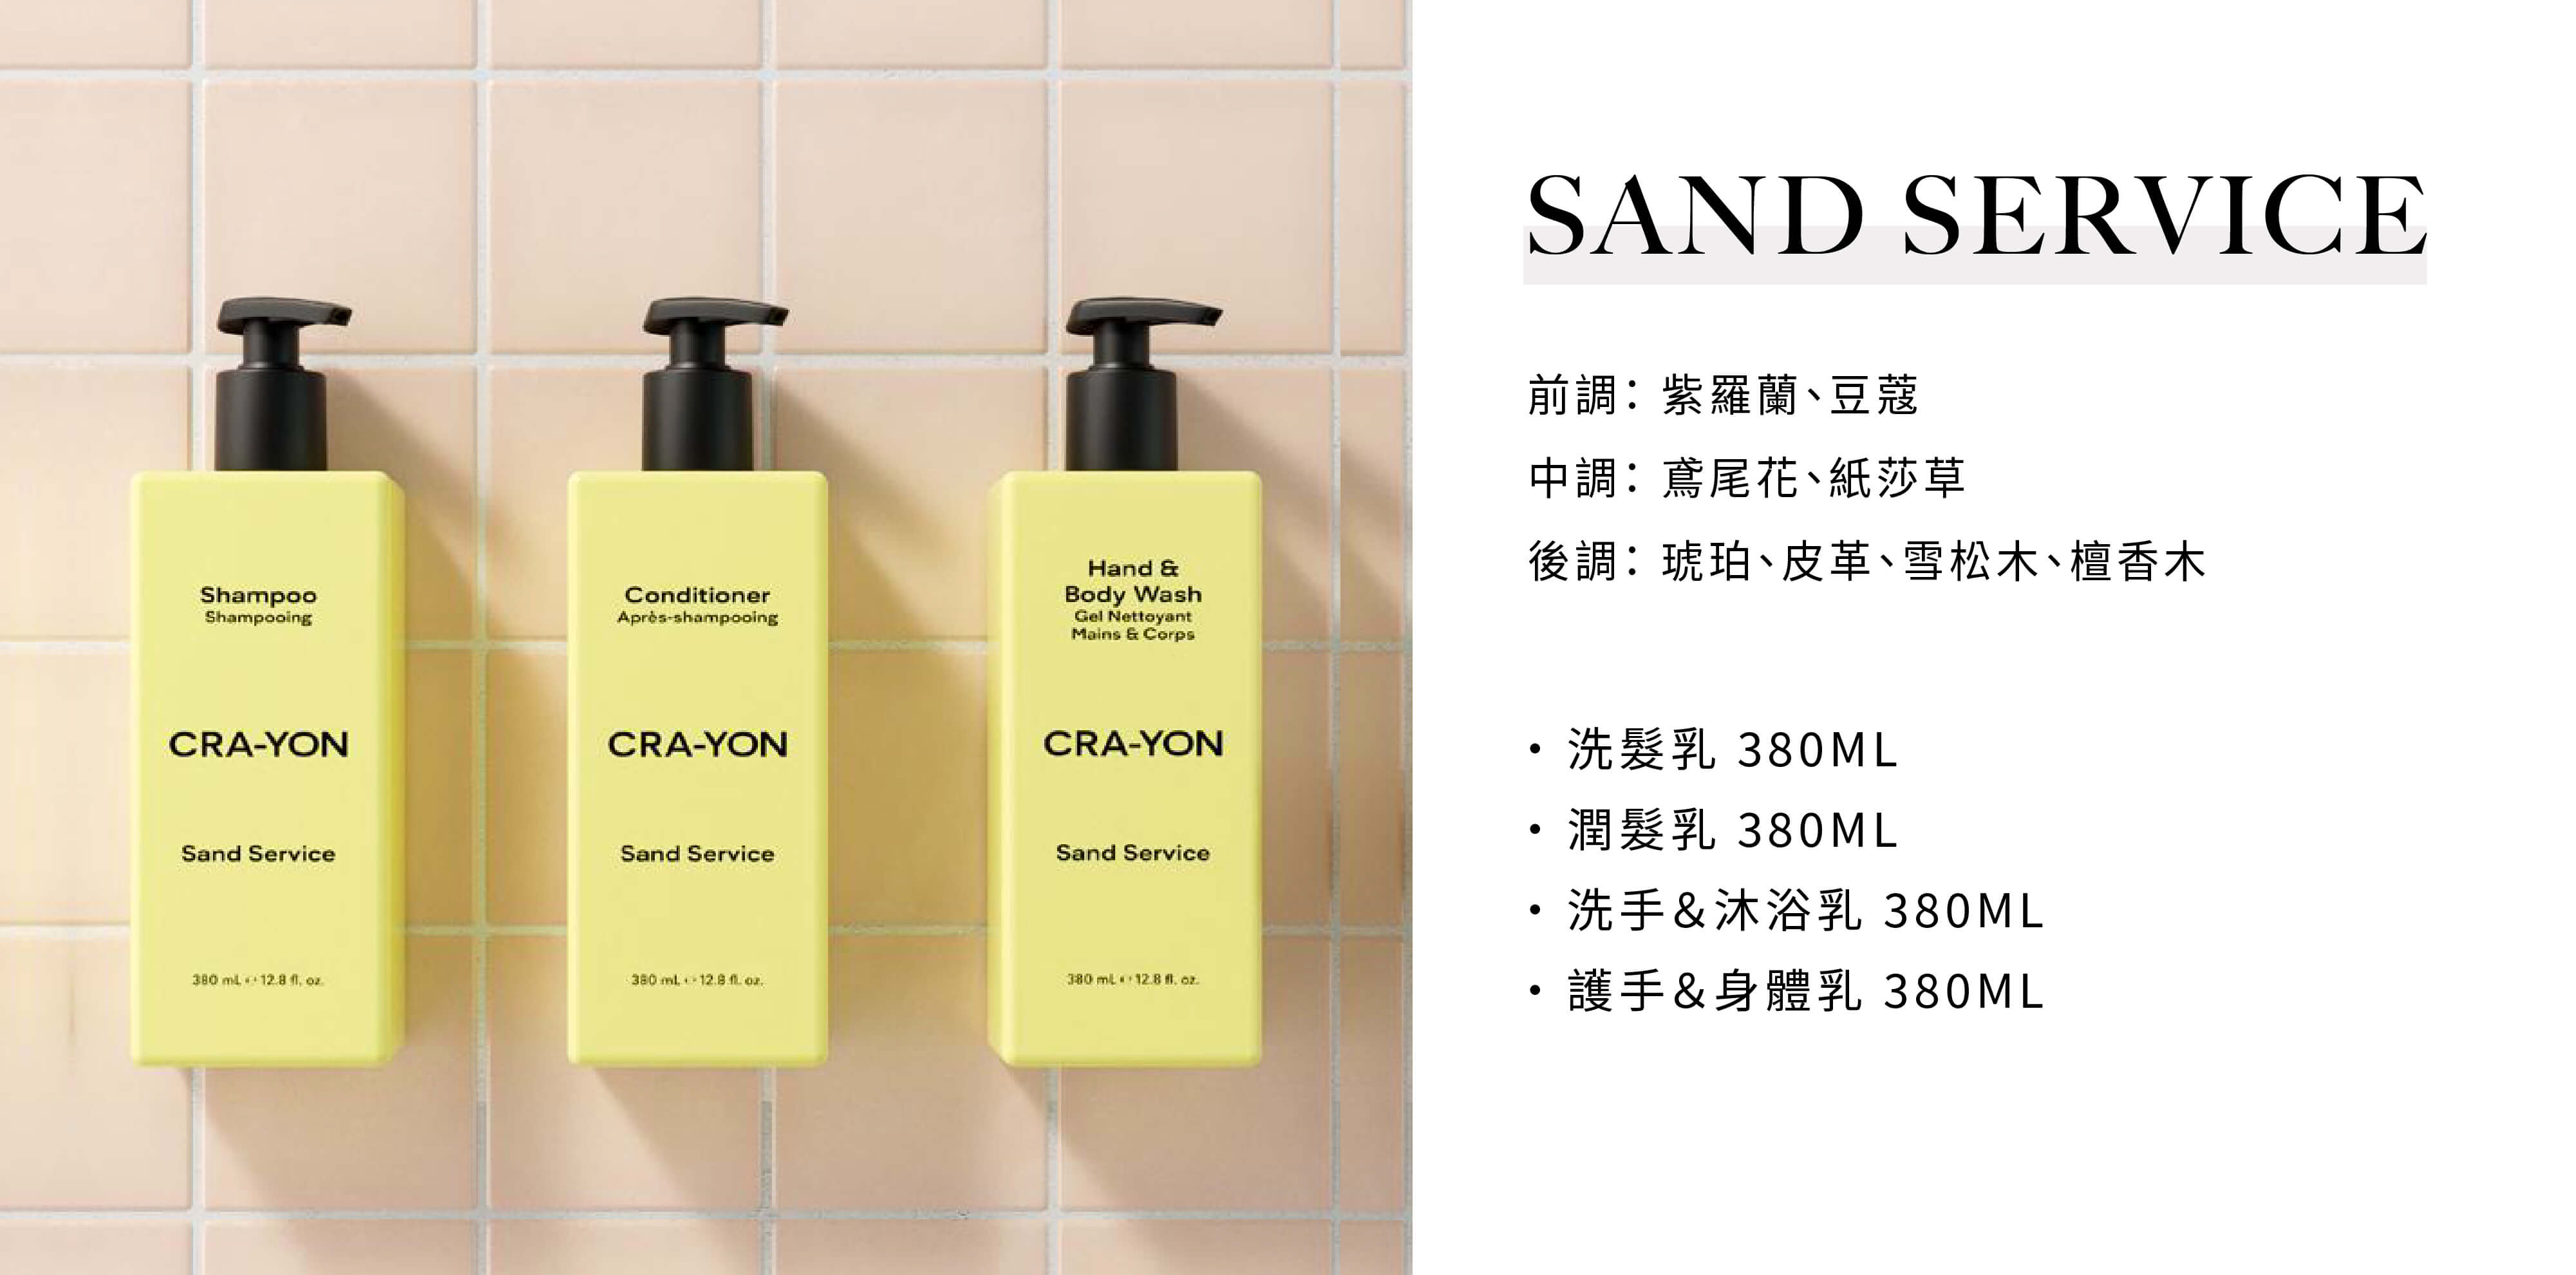 CRA-YON 飯店民宿沐浴用品Sand Service系列，由Sunlife飯店沐浴配品供應商提供